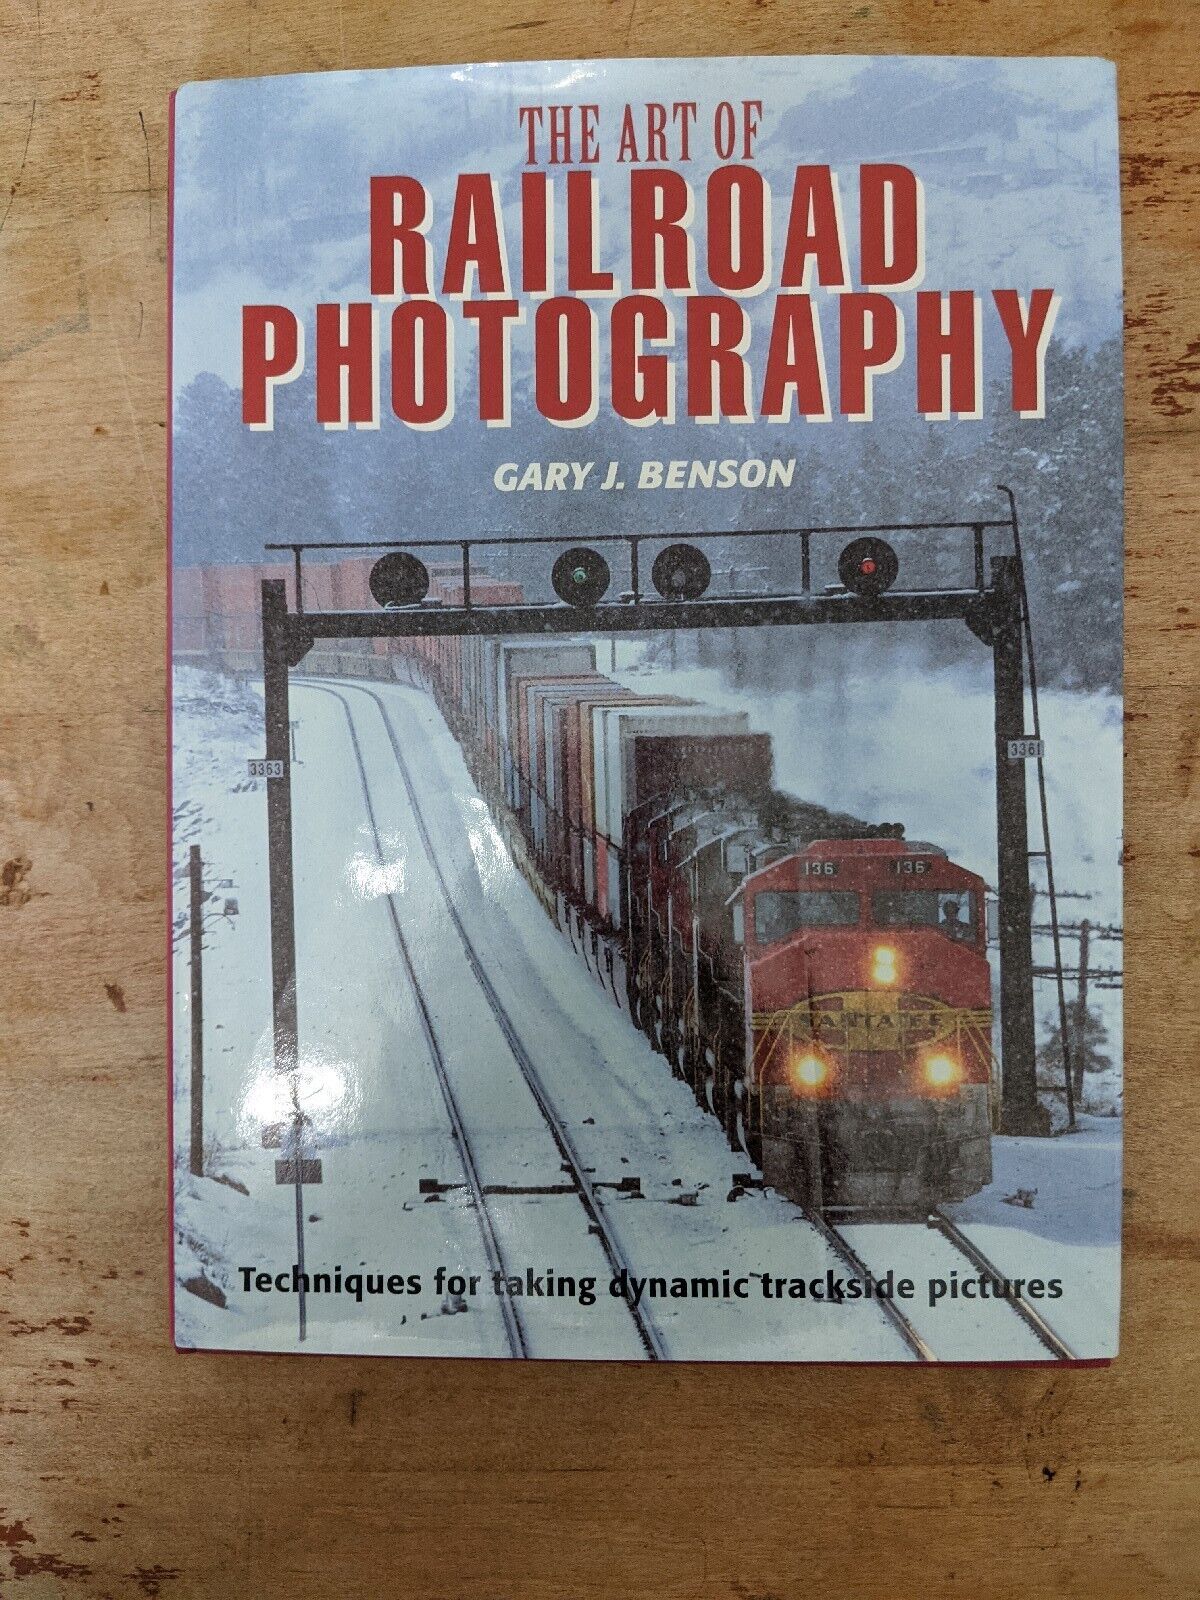 Railroad Book: The Art Of Railroad Photography. Gary J. Benson